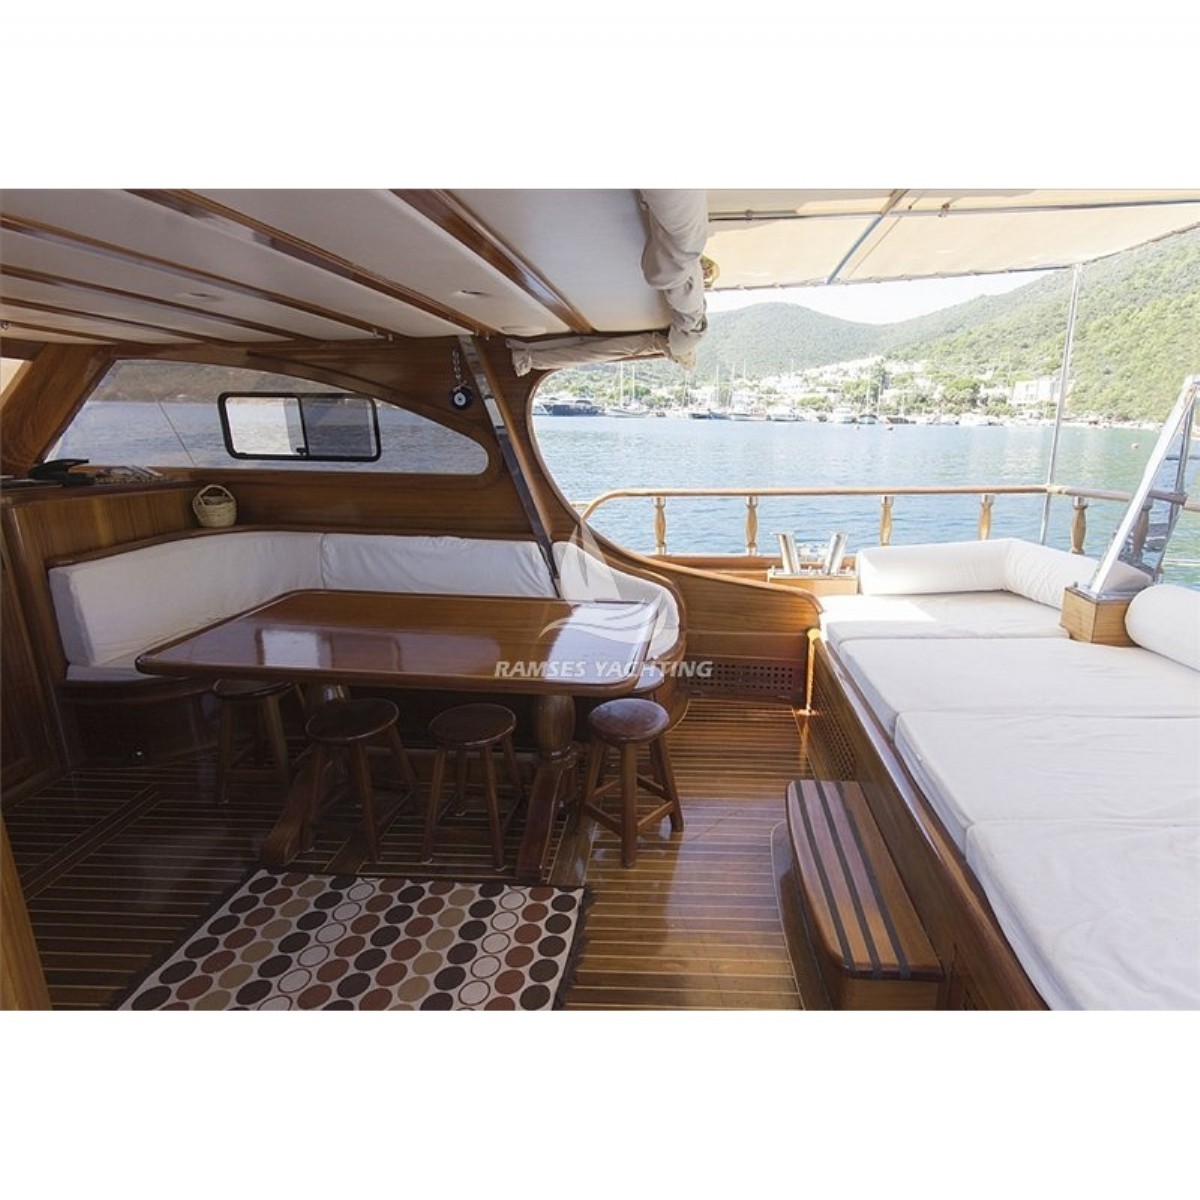 Luxury Boats | L330 - Gulet Yacht Charter Turkey for 6 Person | L330 - Gulet Yacht Charter Turkey for 6 Person | Yacht charter Turkey, Gulet charter,  YachtingTurkey,  gulet Turkey,  cabin charter , yachtrentalsTurkey,  boat charter Turkey,  Bodrum yacht charter, | 